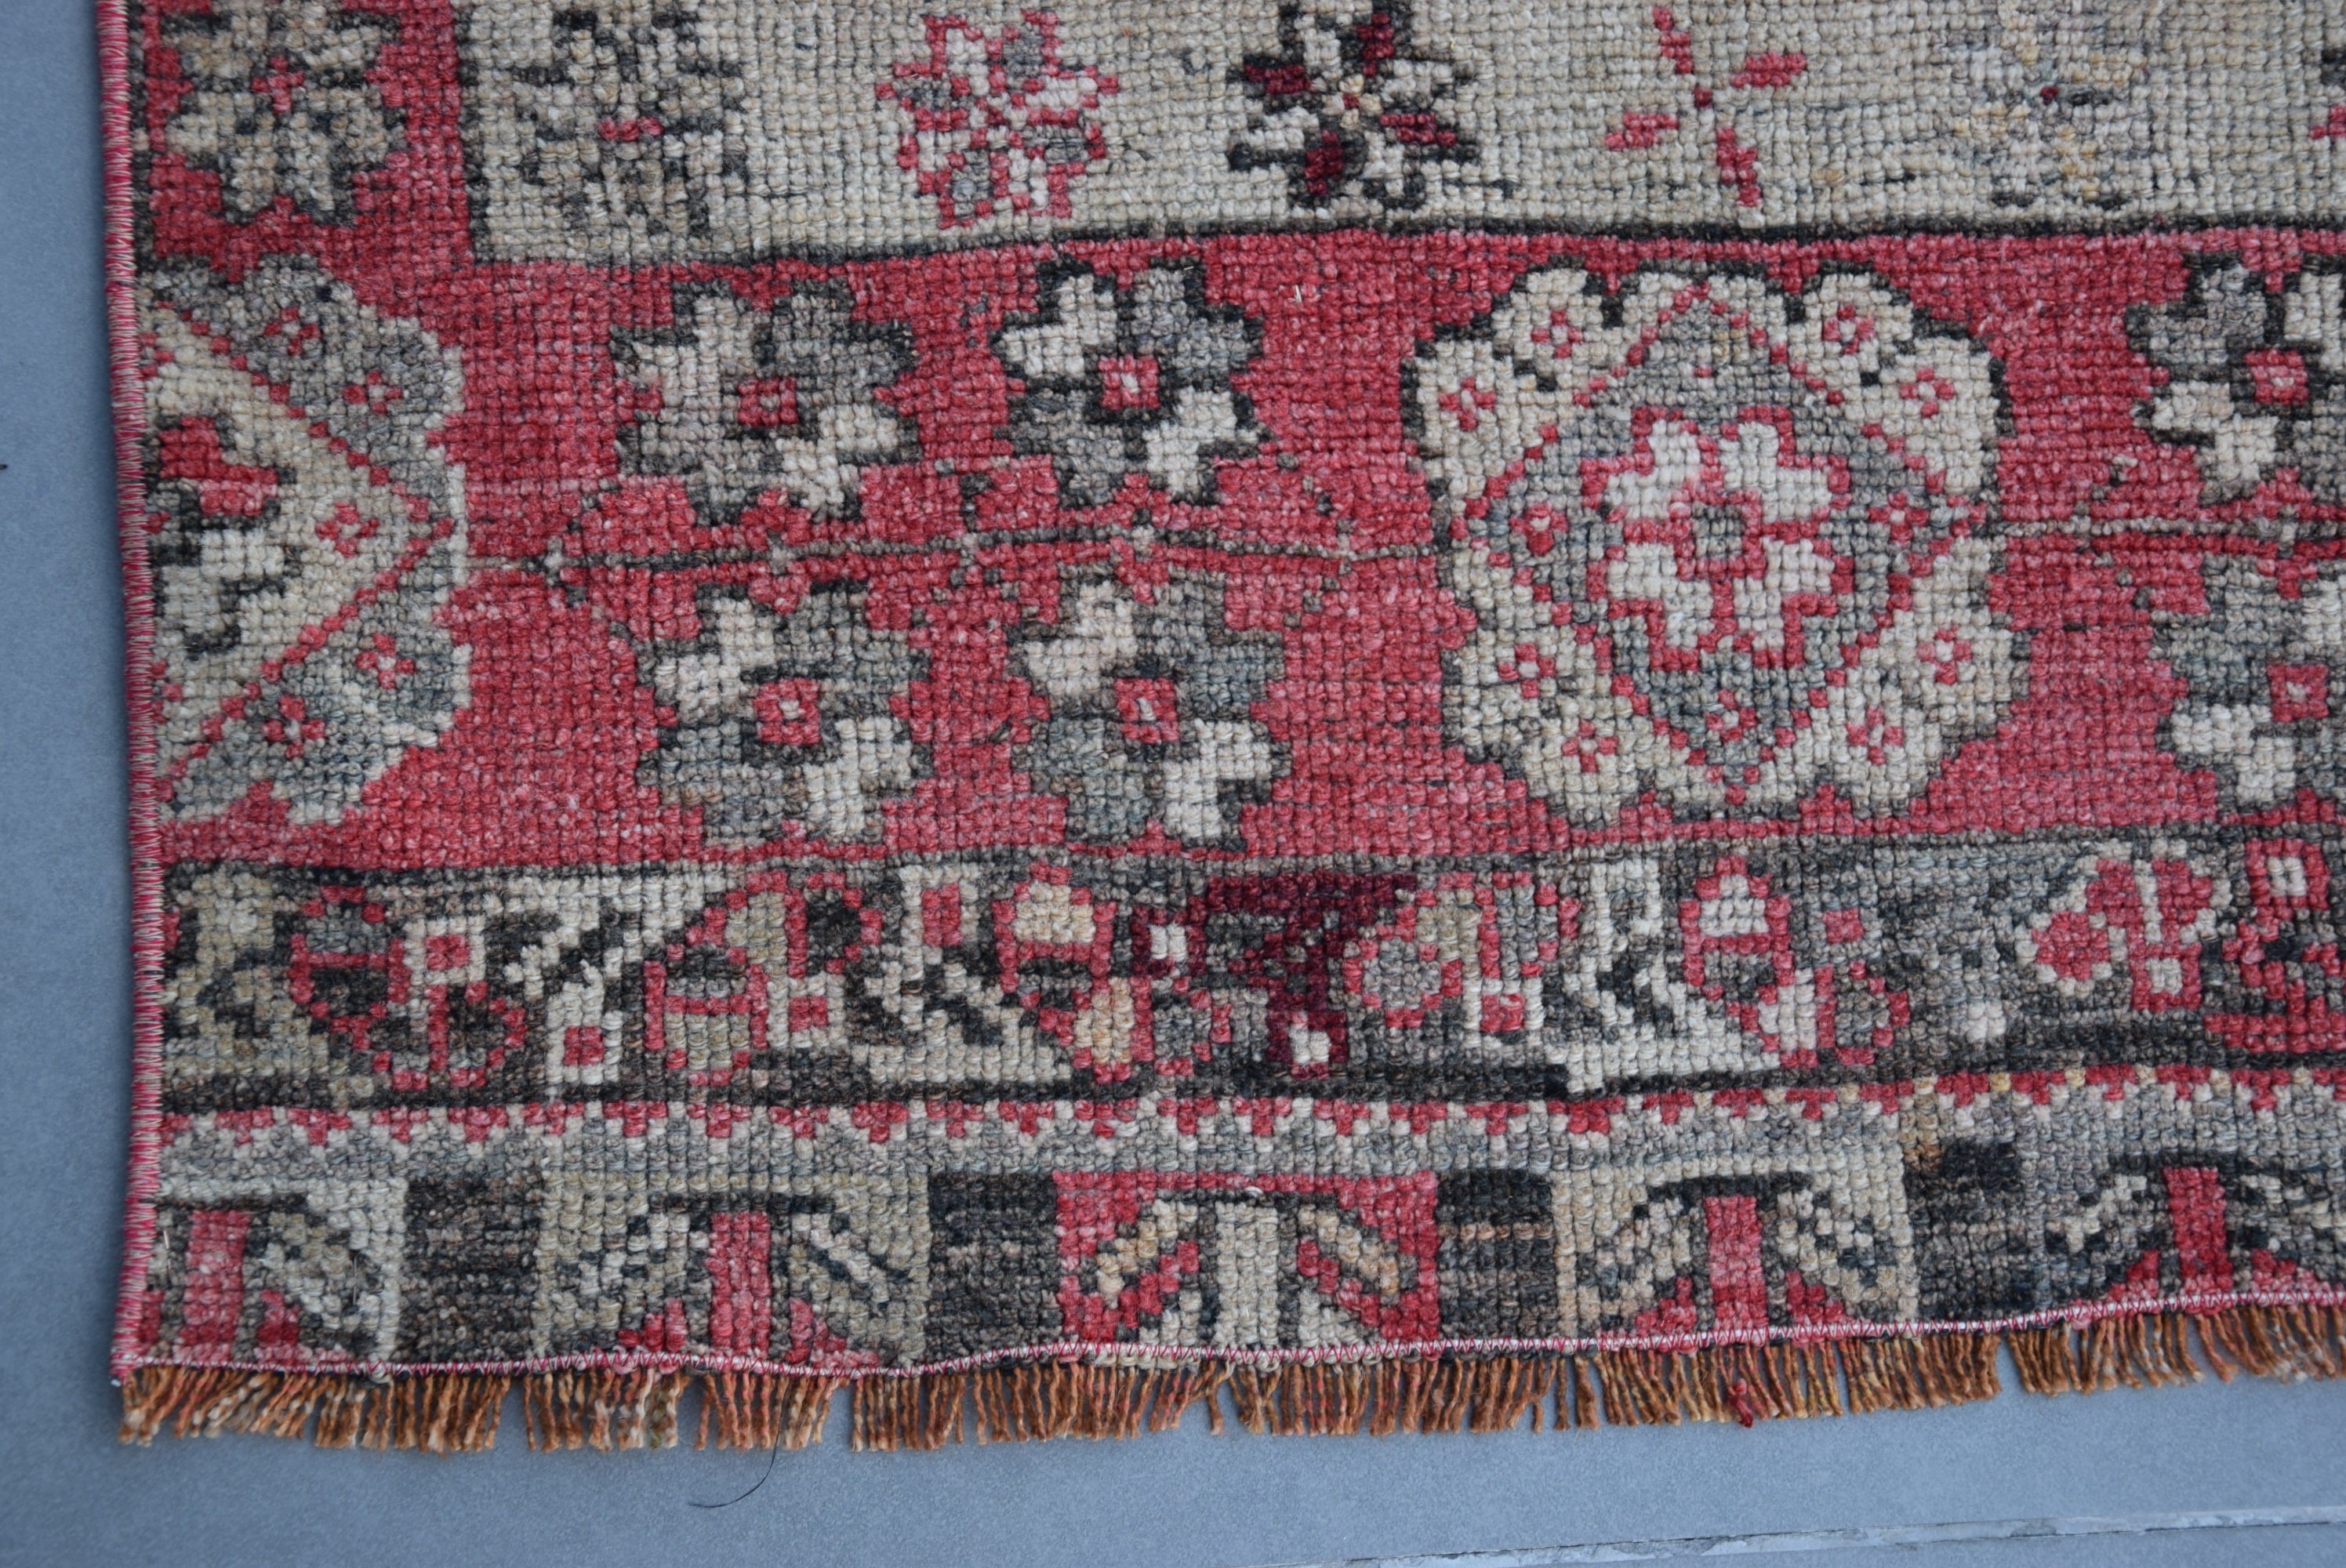 Vintage Rug, Kitchen Rugs, Turkish Rug, Red Moroccan Rug, Rugs for Corridor, Stair Rug, Home Decor Rug, 2.4x6.1 ft Runner Rug, Cool Rug